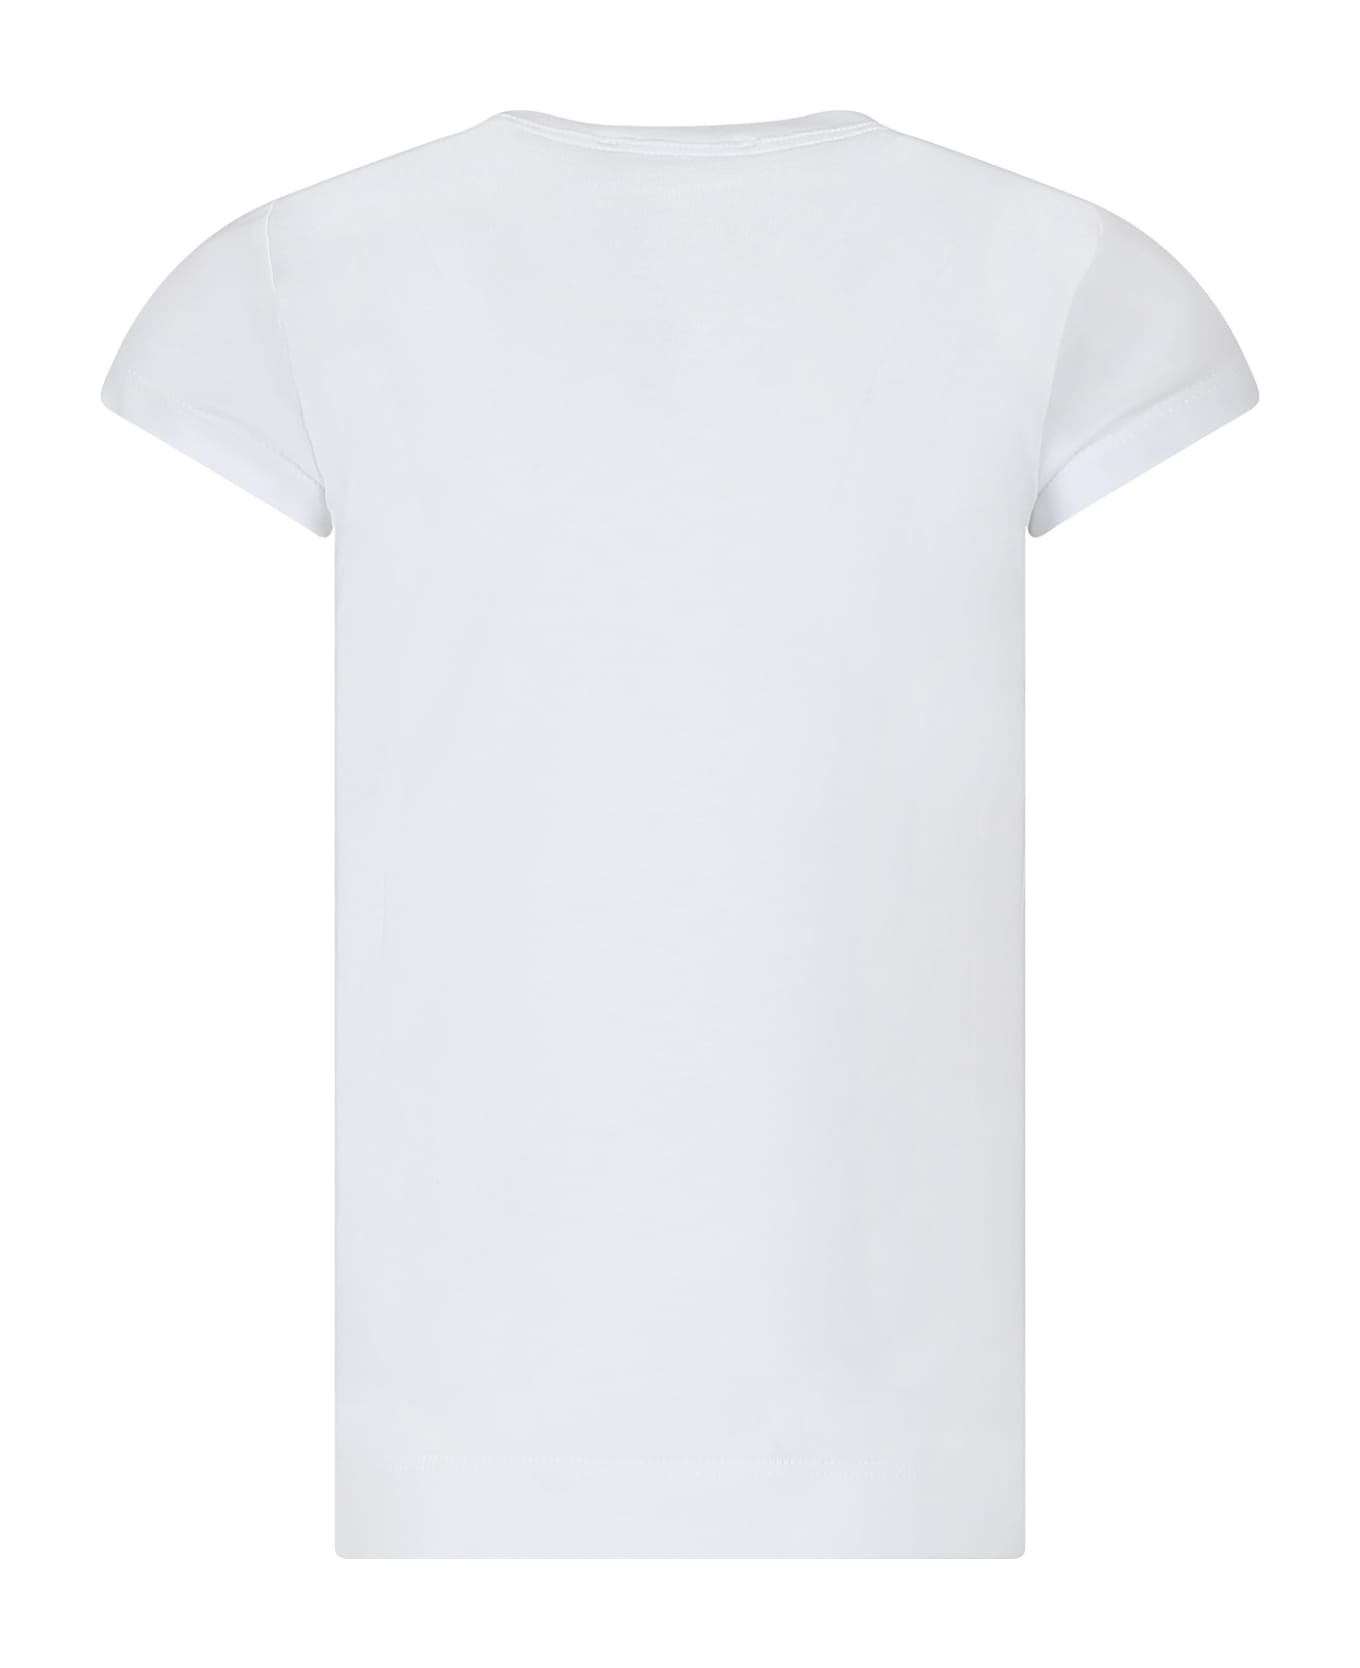 Monnalisa White T-shirt For Girl With Starfish And Logo - White